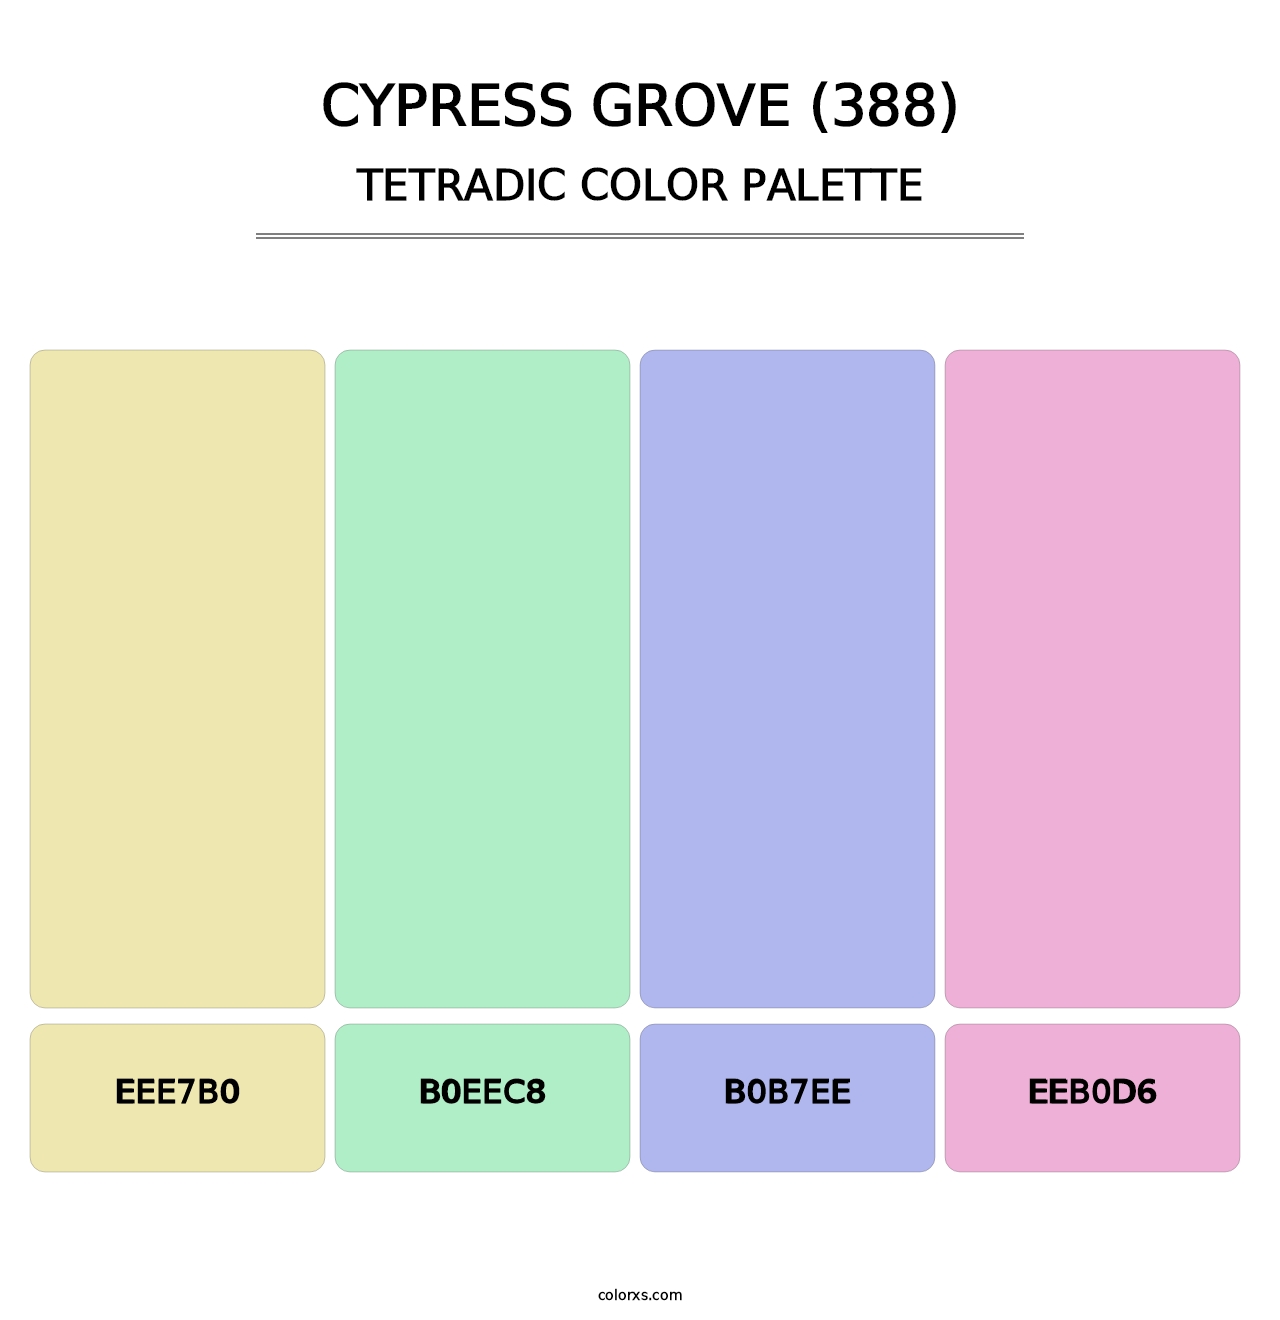 Cypress Grove (388) - Tetradic Color Palette